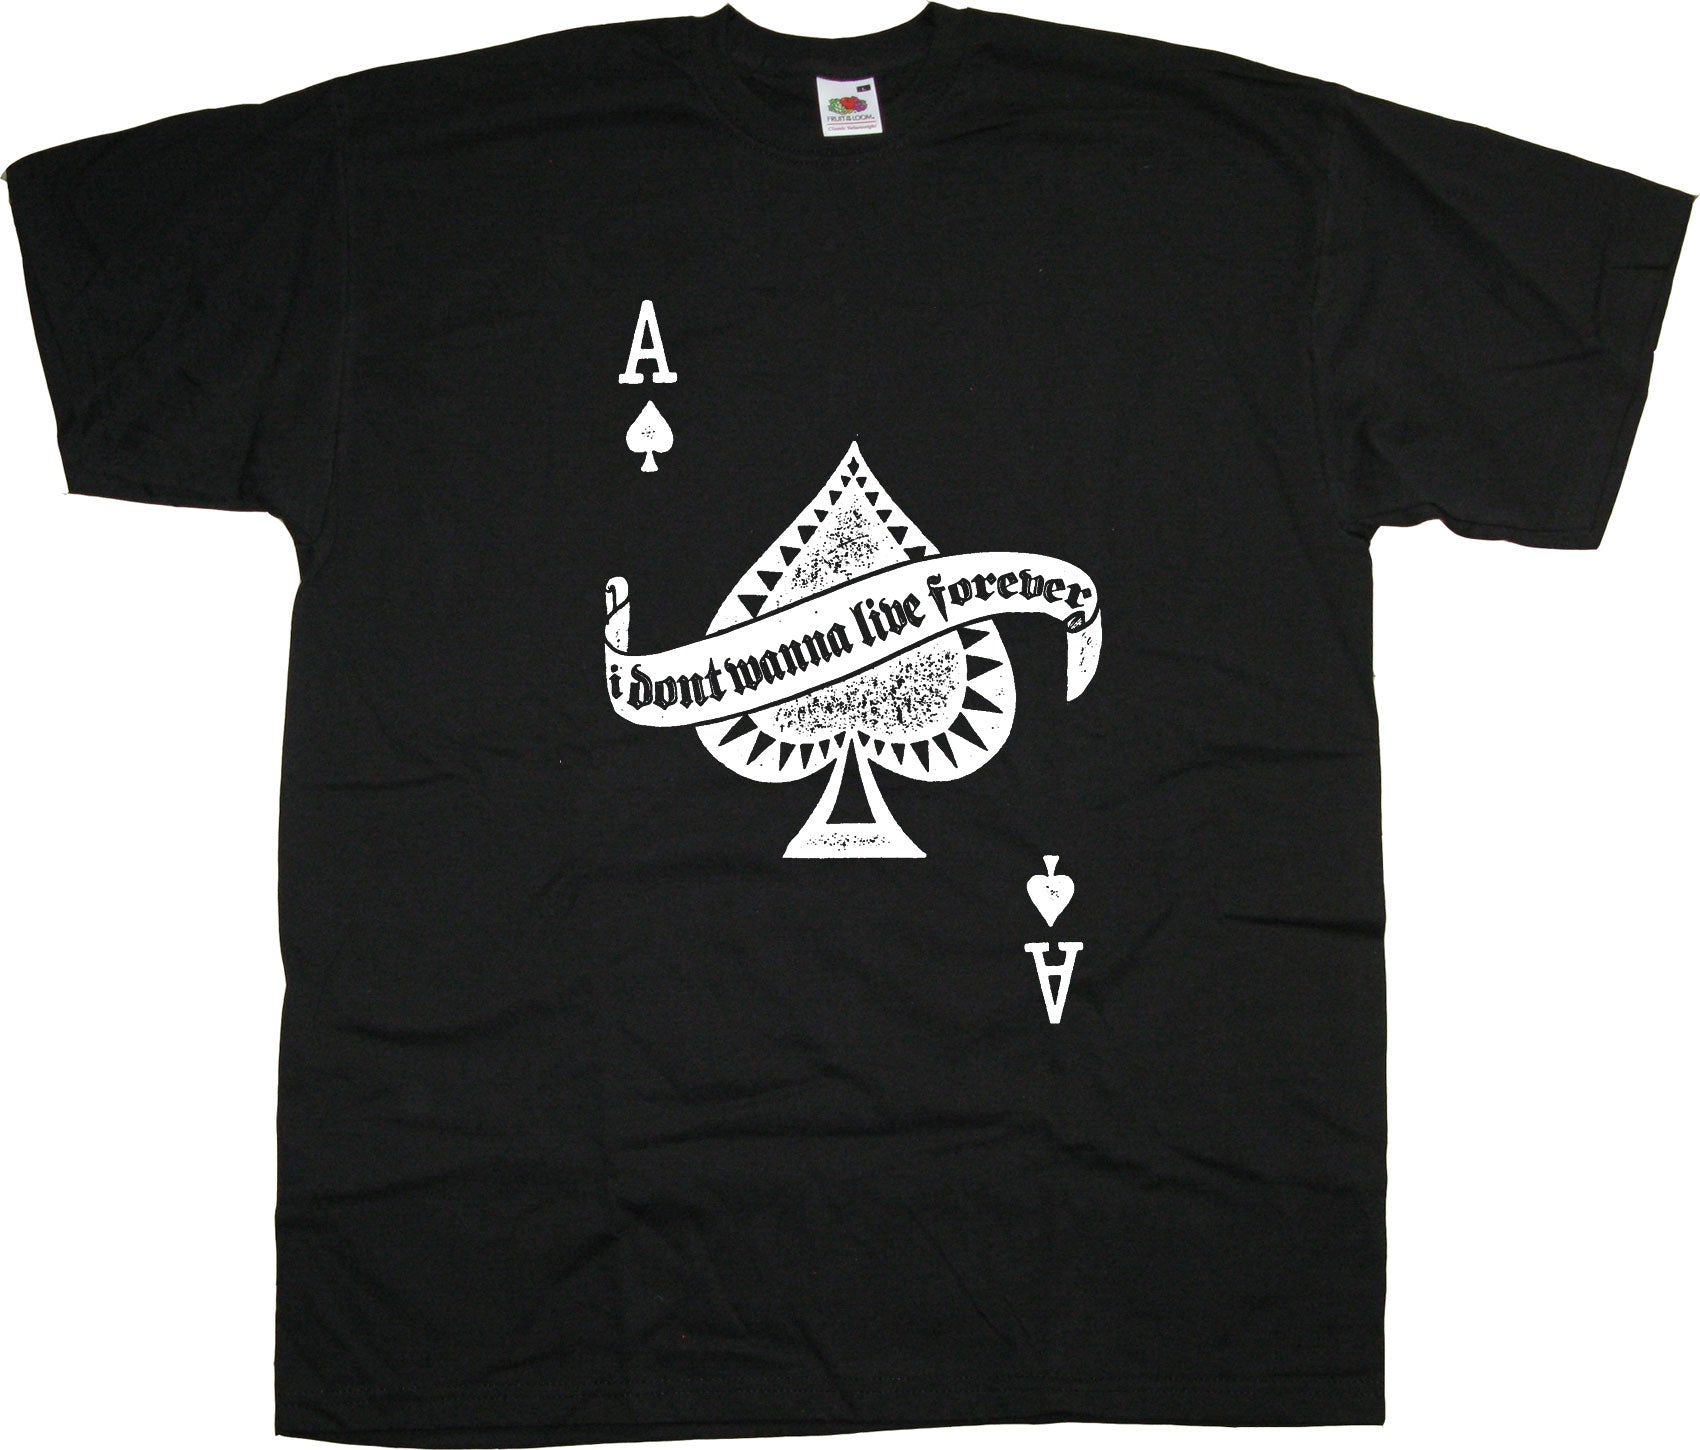 ace of spades shirt